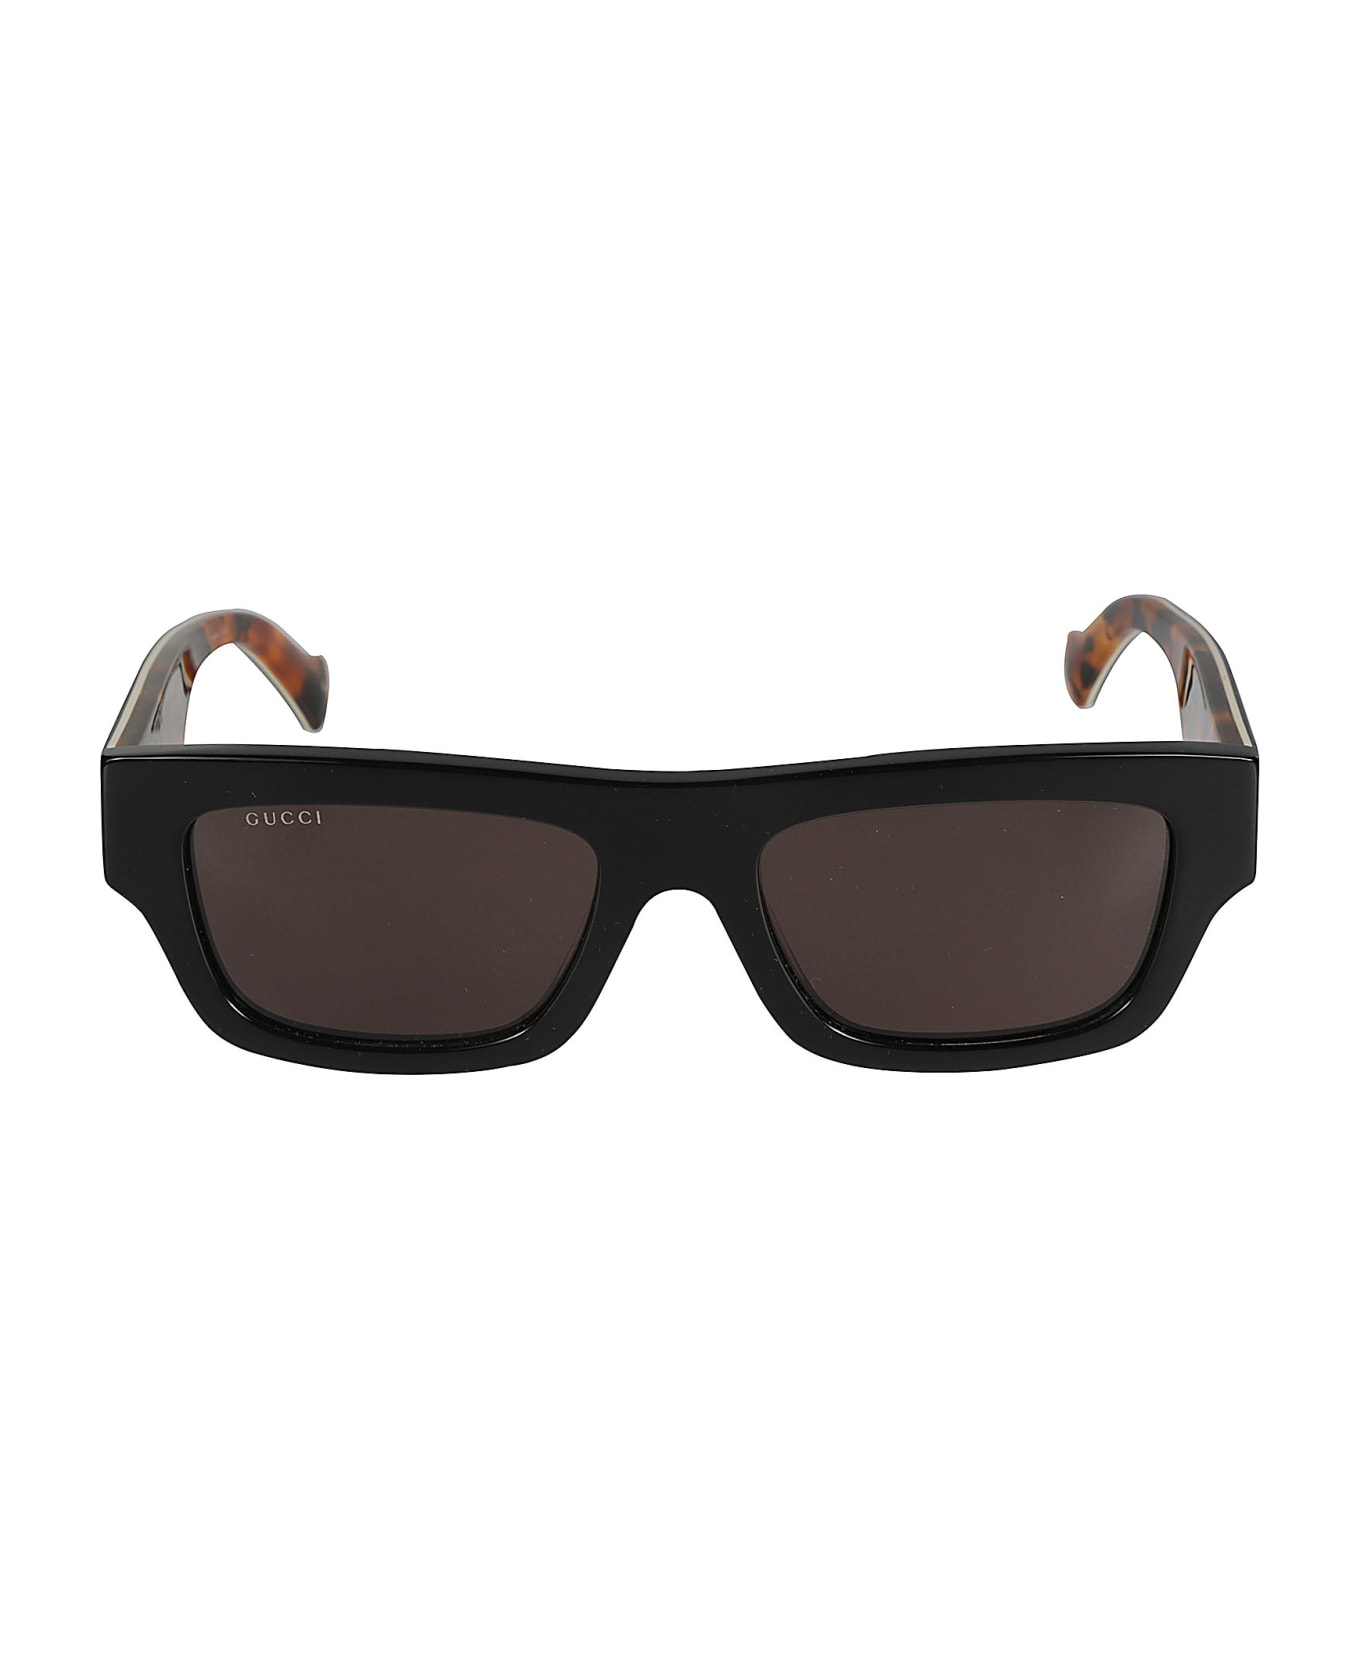 Gucci Eyewear Flame Effect Classic Sunglasses - Black/Brown